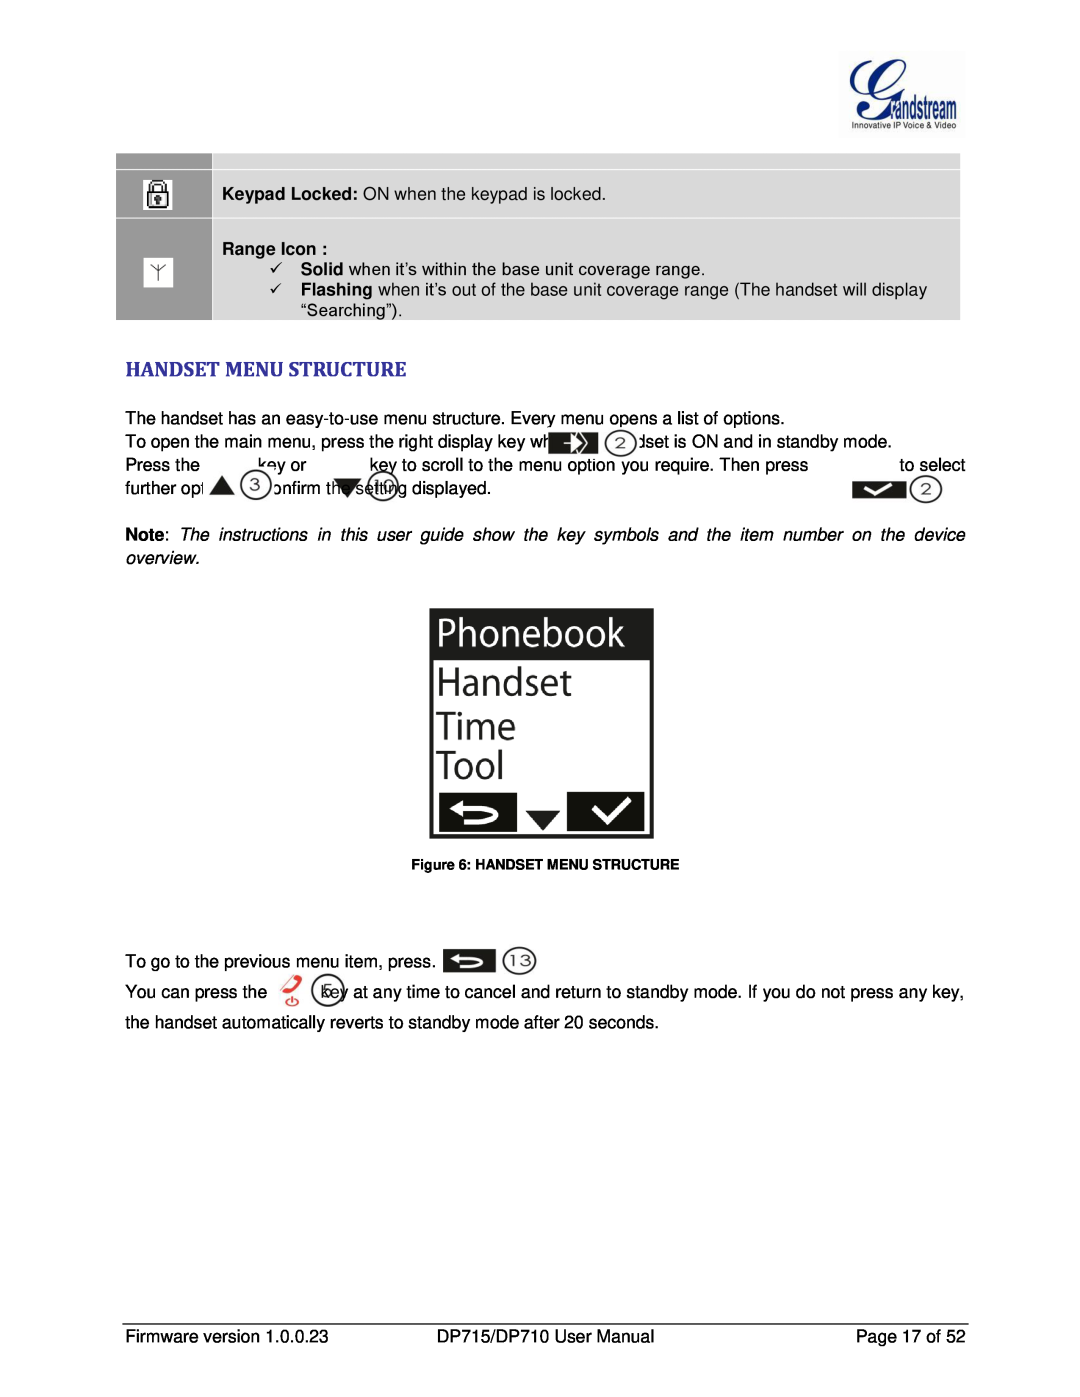 Grandstream Networks DP710 manual Handset Menu Structure, Range Icon 